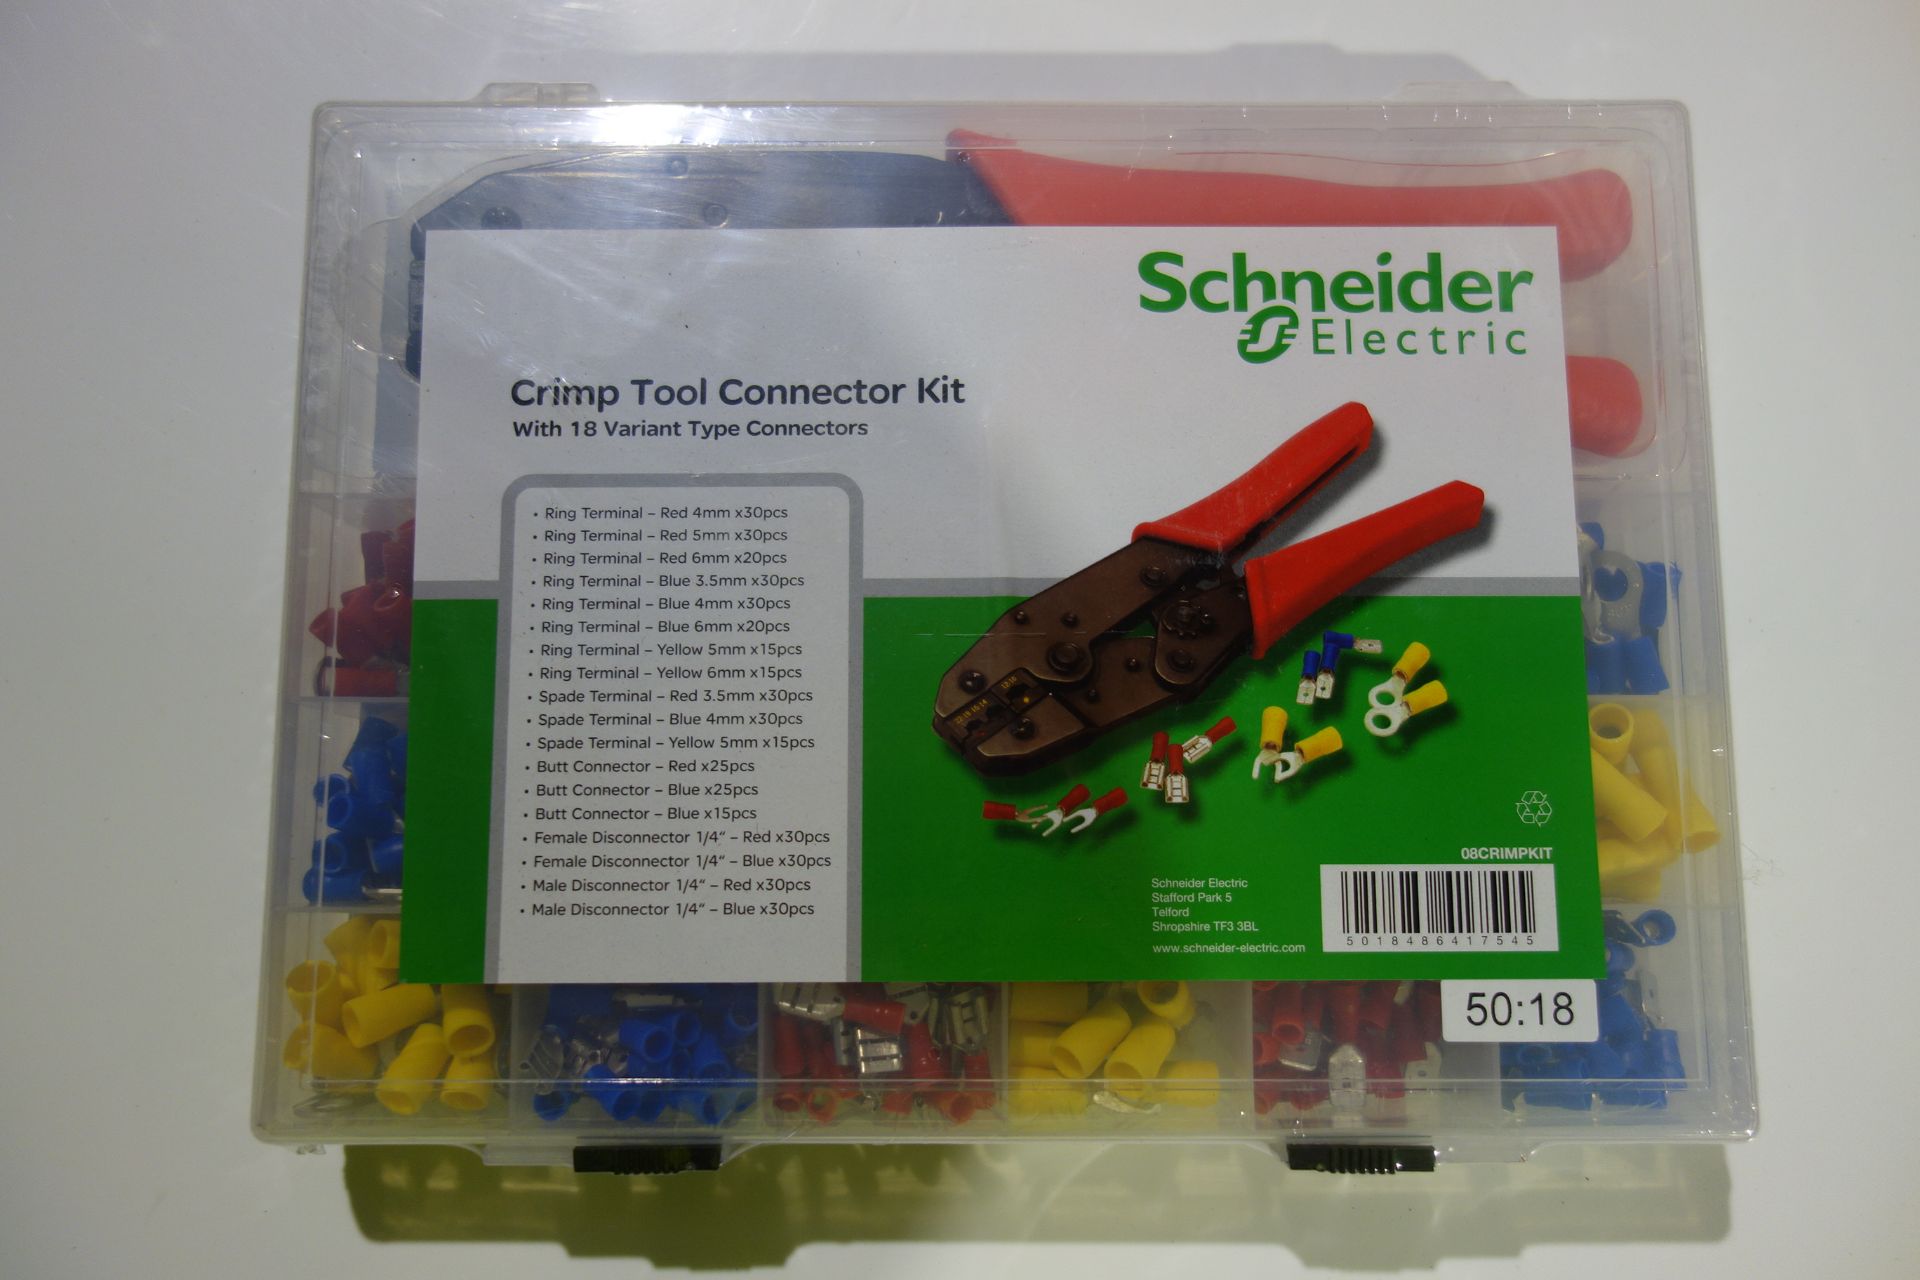 5 X Schneider 08CRIMPKIT Crimp Tool Connector Kit C/W 18 Variant Type Connectors